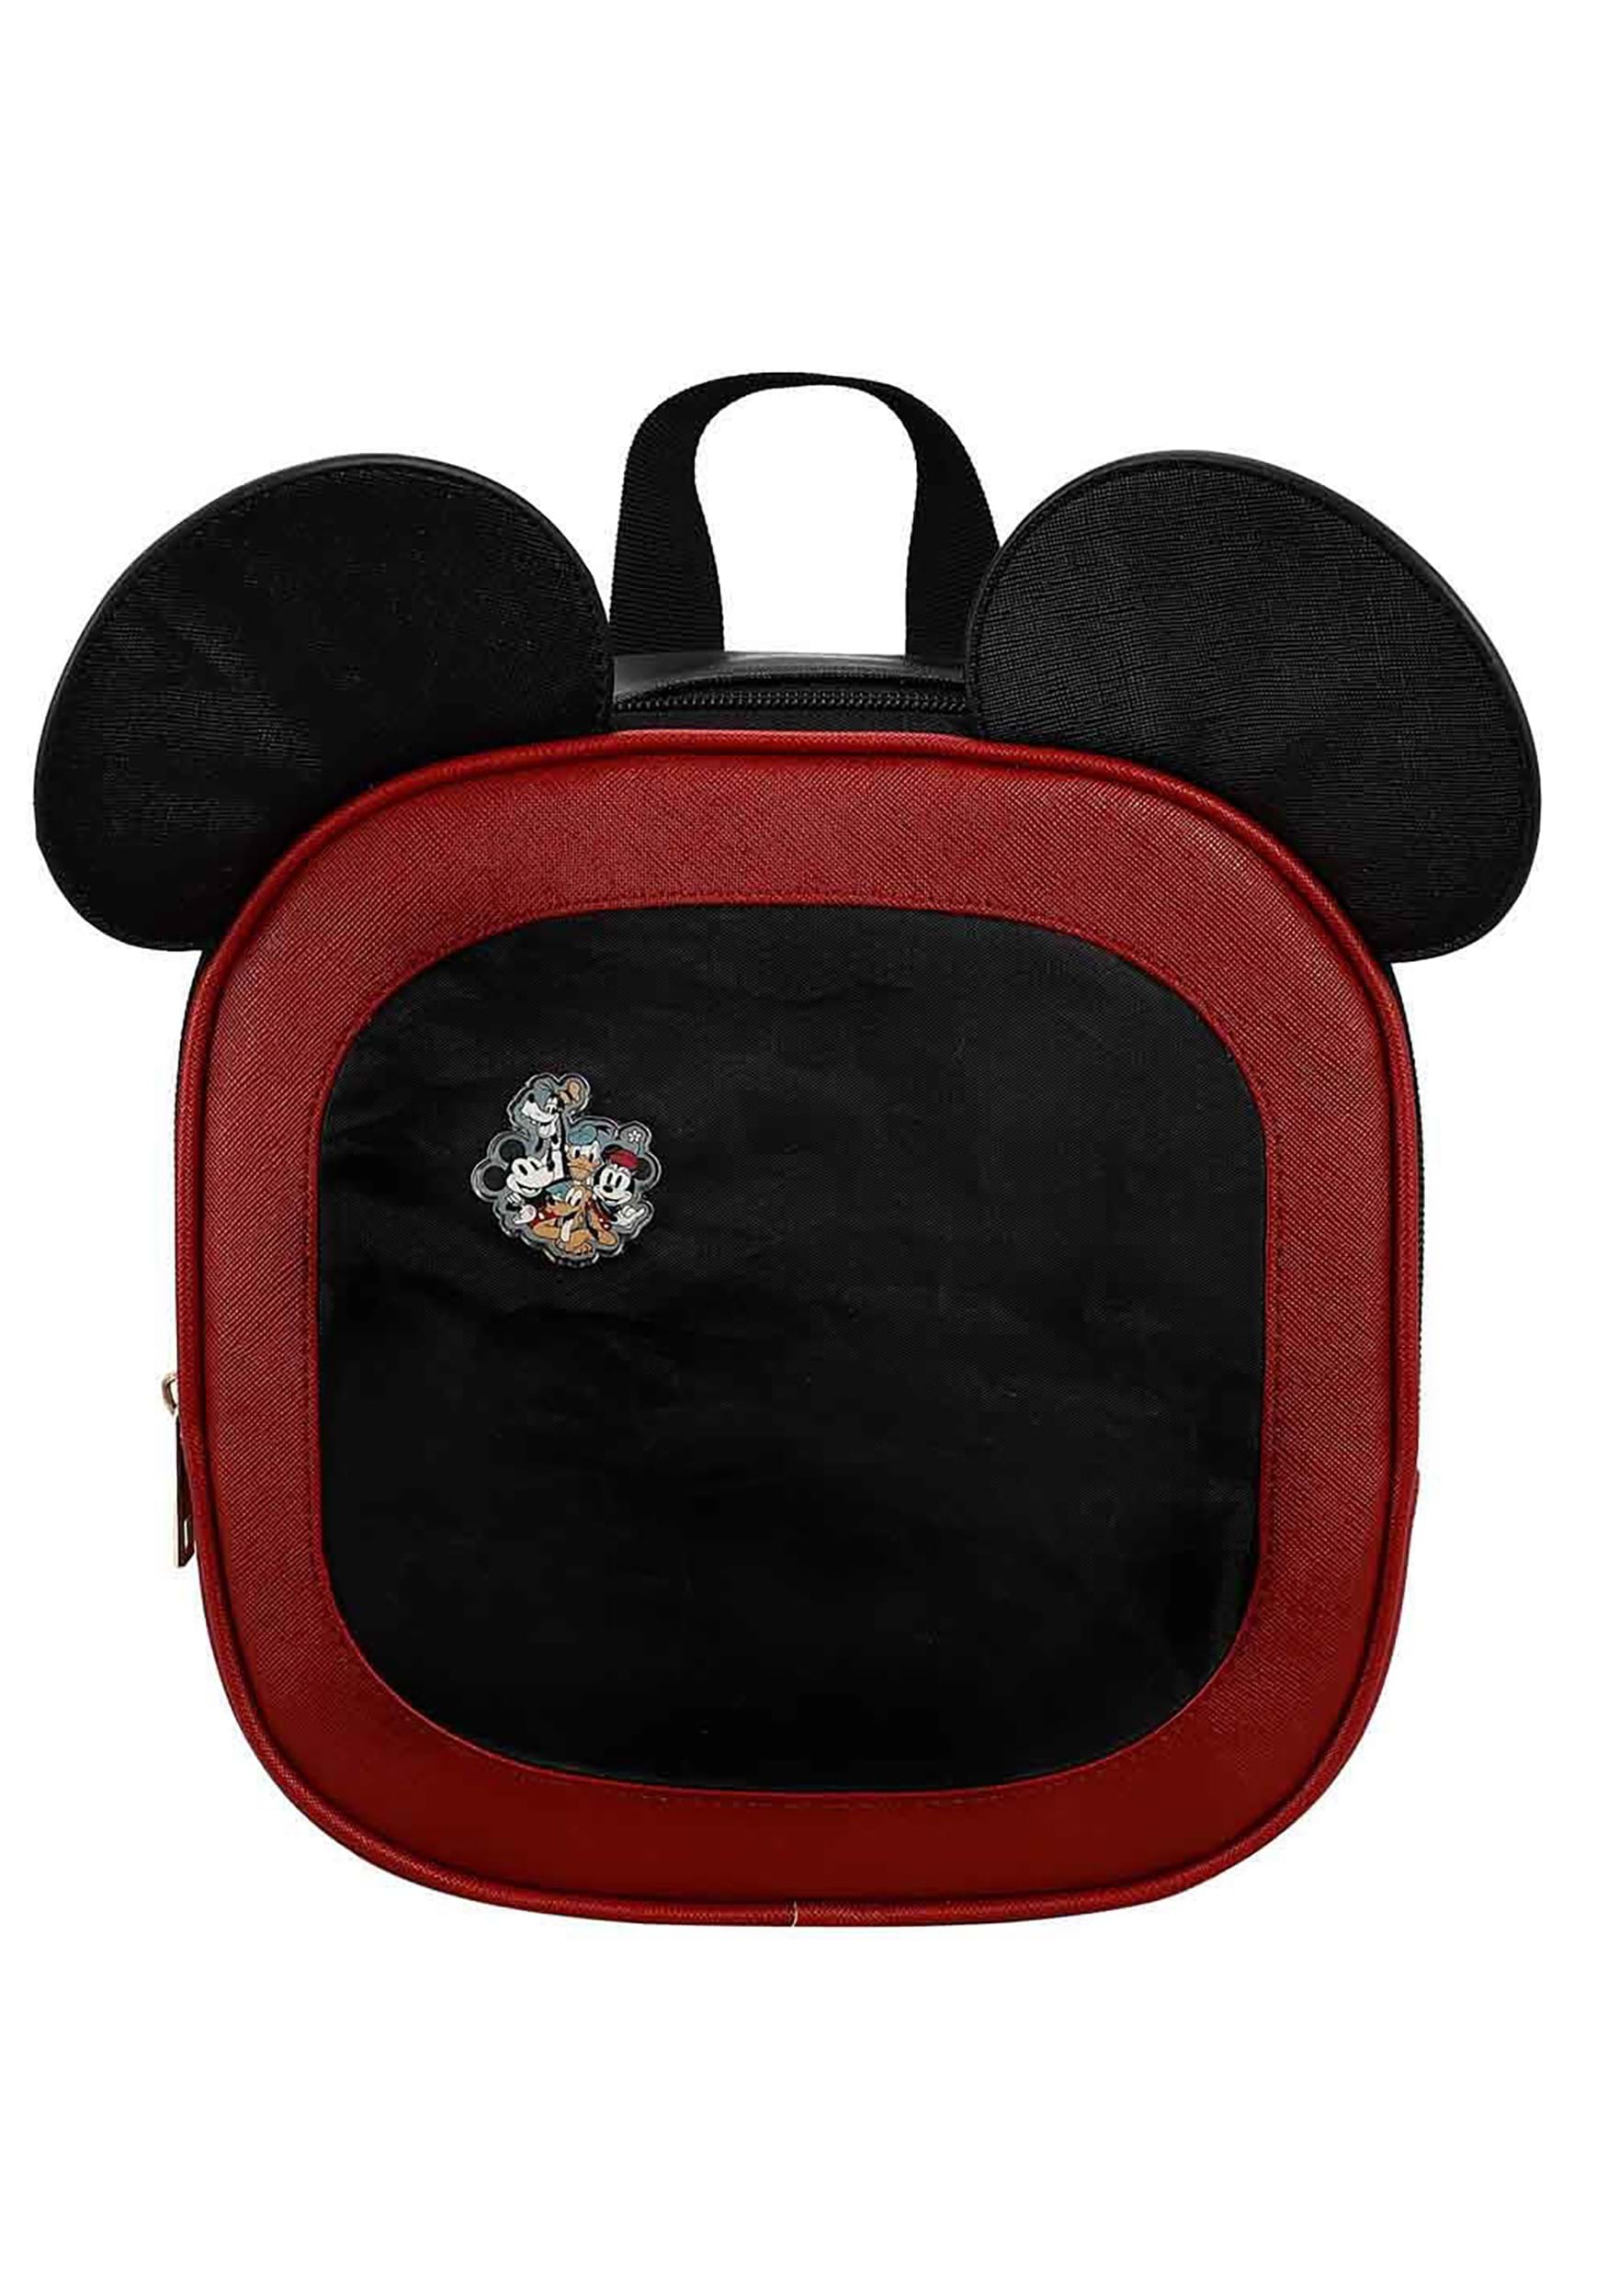 Mickey Mouse Hamburger Bag 2021 Disney Parks Flair Charm Zip Coin Mini Purse  New | eBay